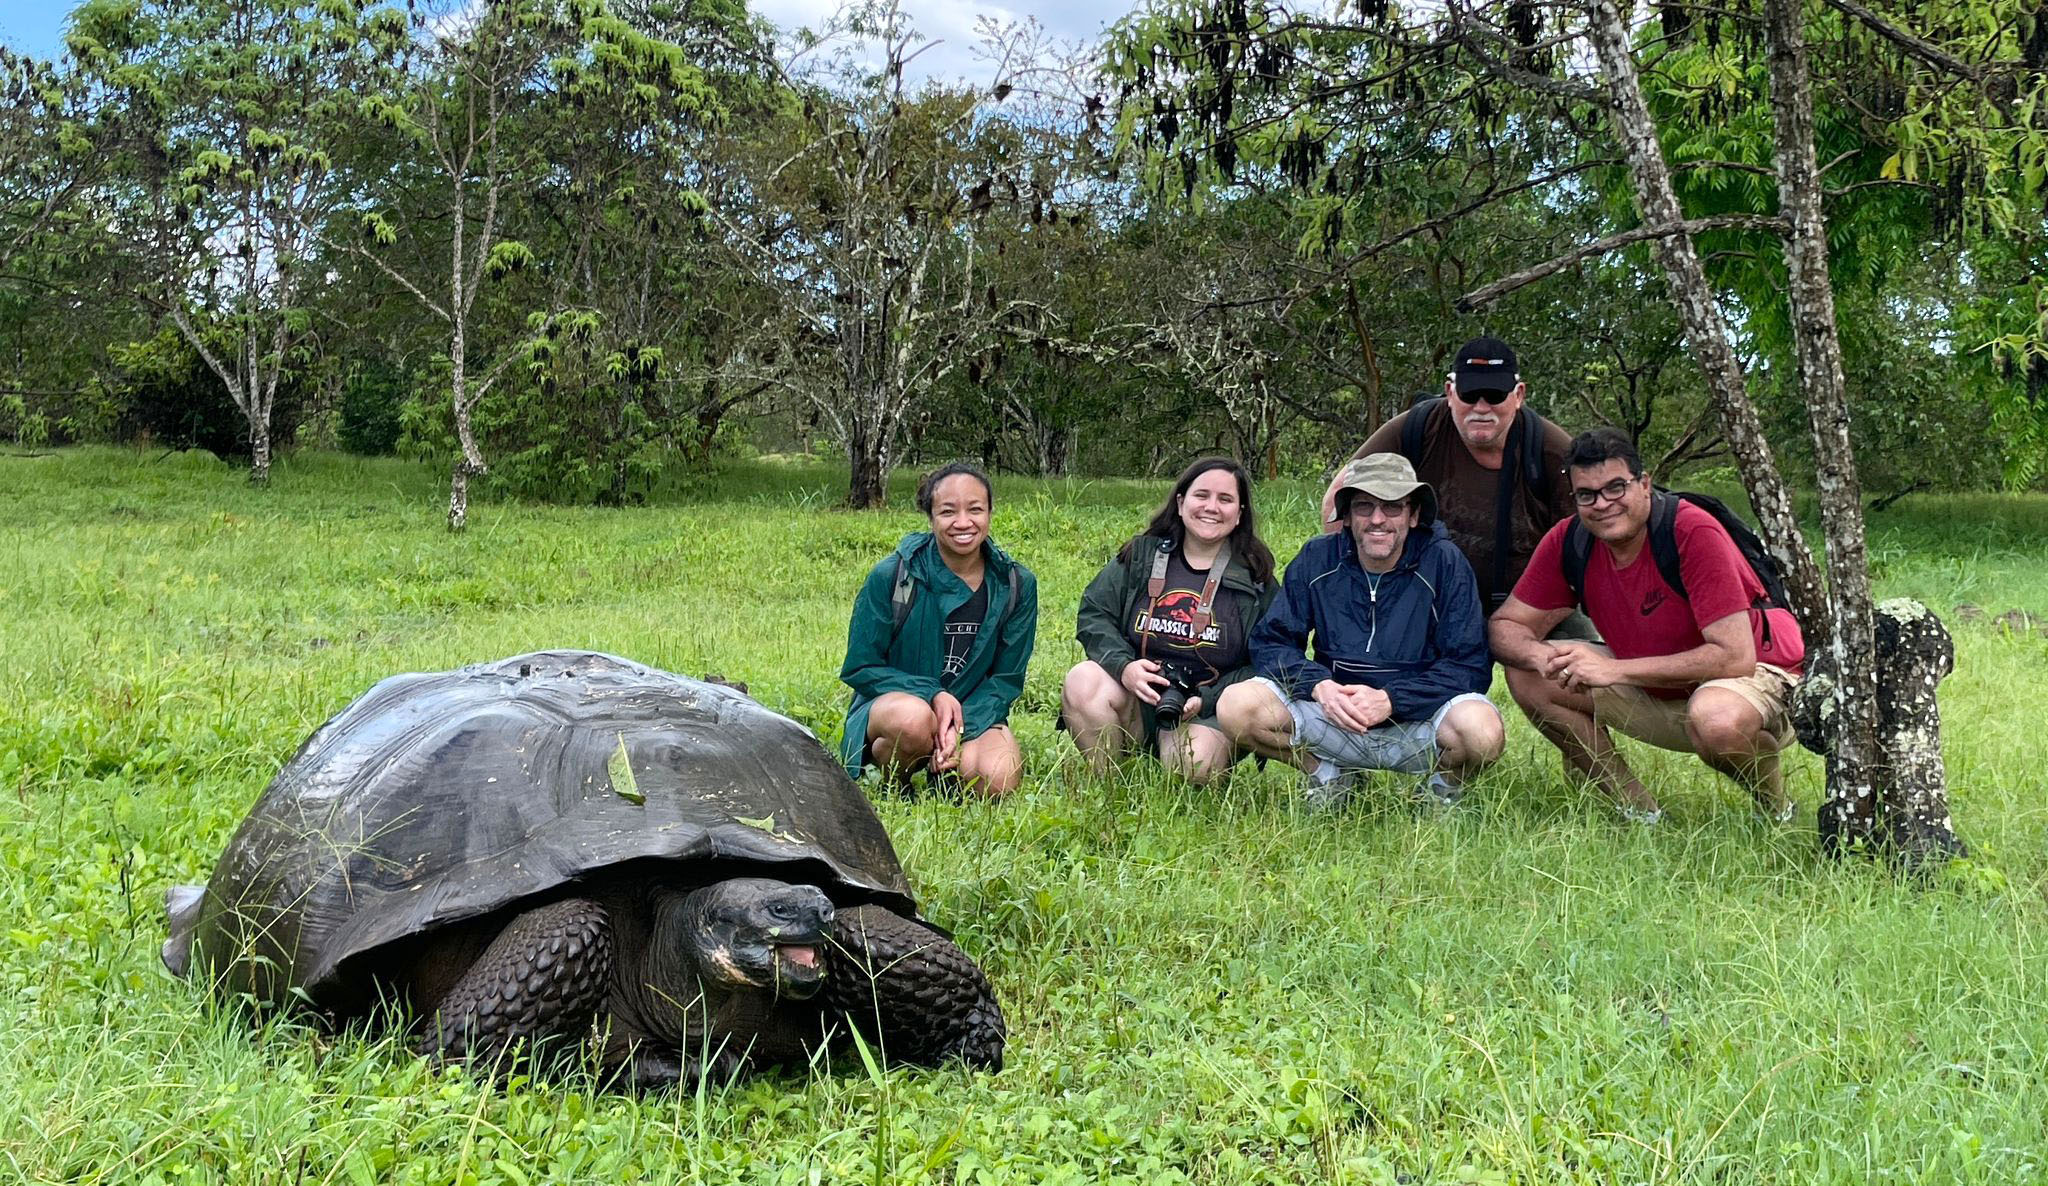 Galápagos Islands team photo posing with a giant tortoise